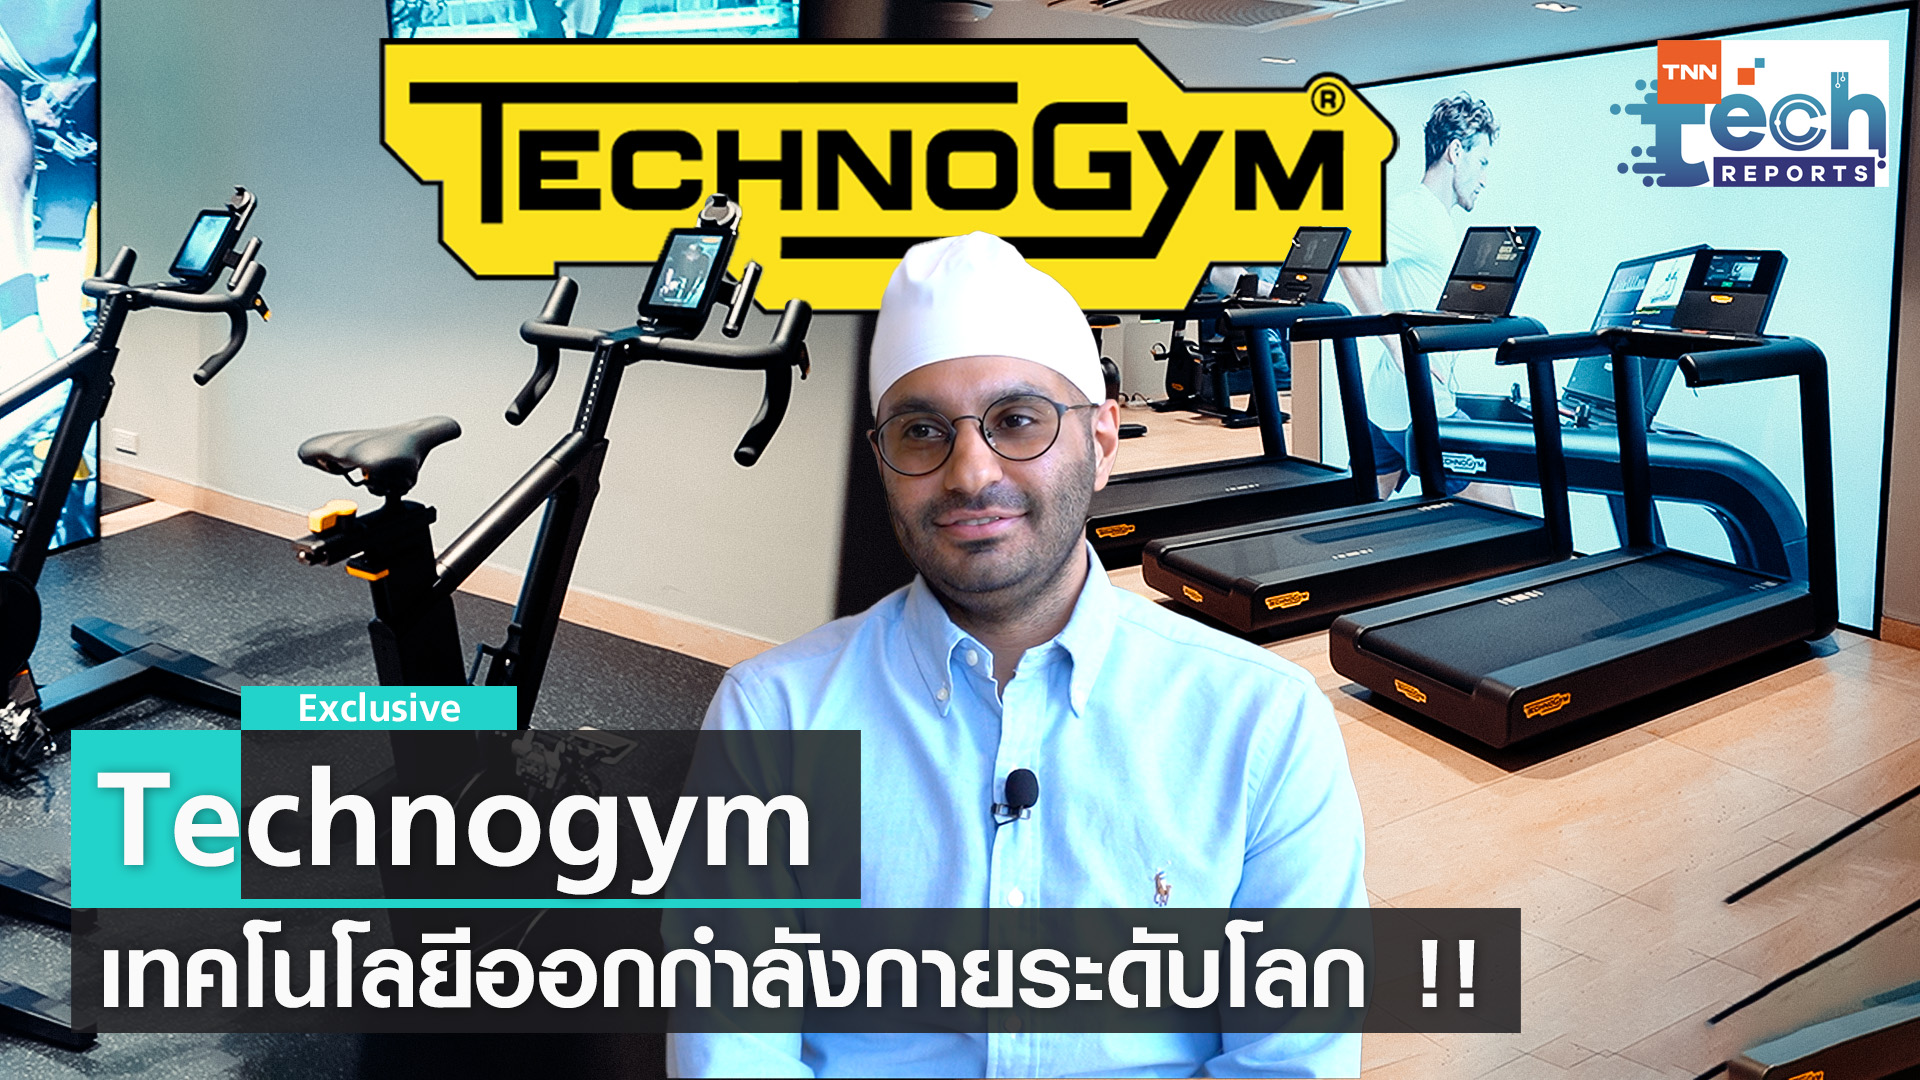 Technogym เทคโนโลยีออกกำลังกายระดับโลกสุดไฮเทค | TNN Tech Reports